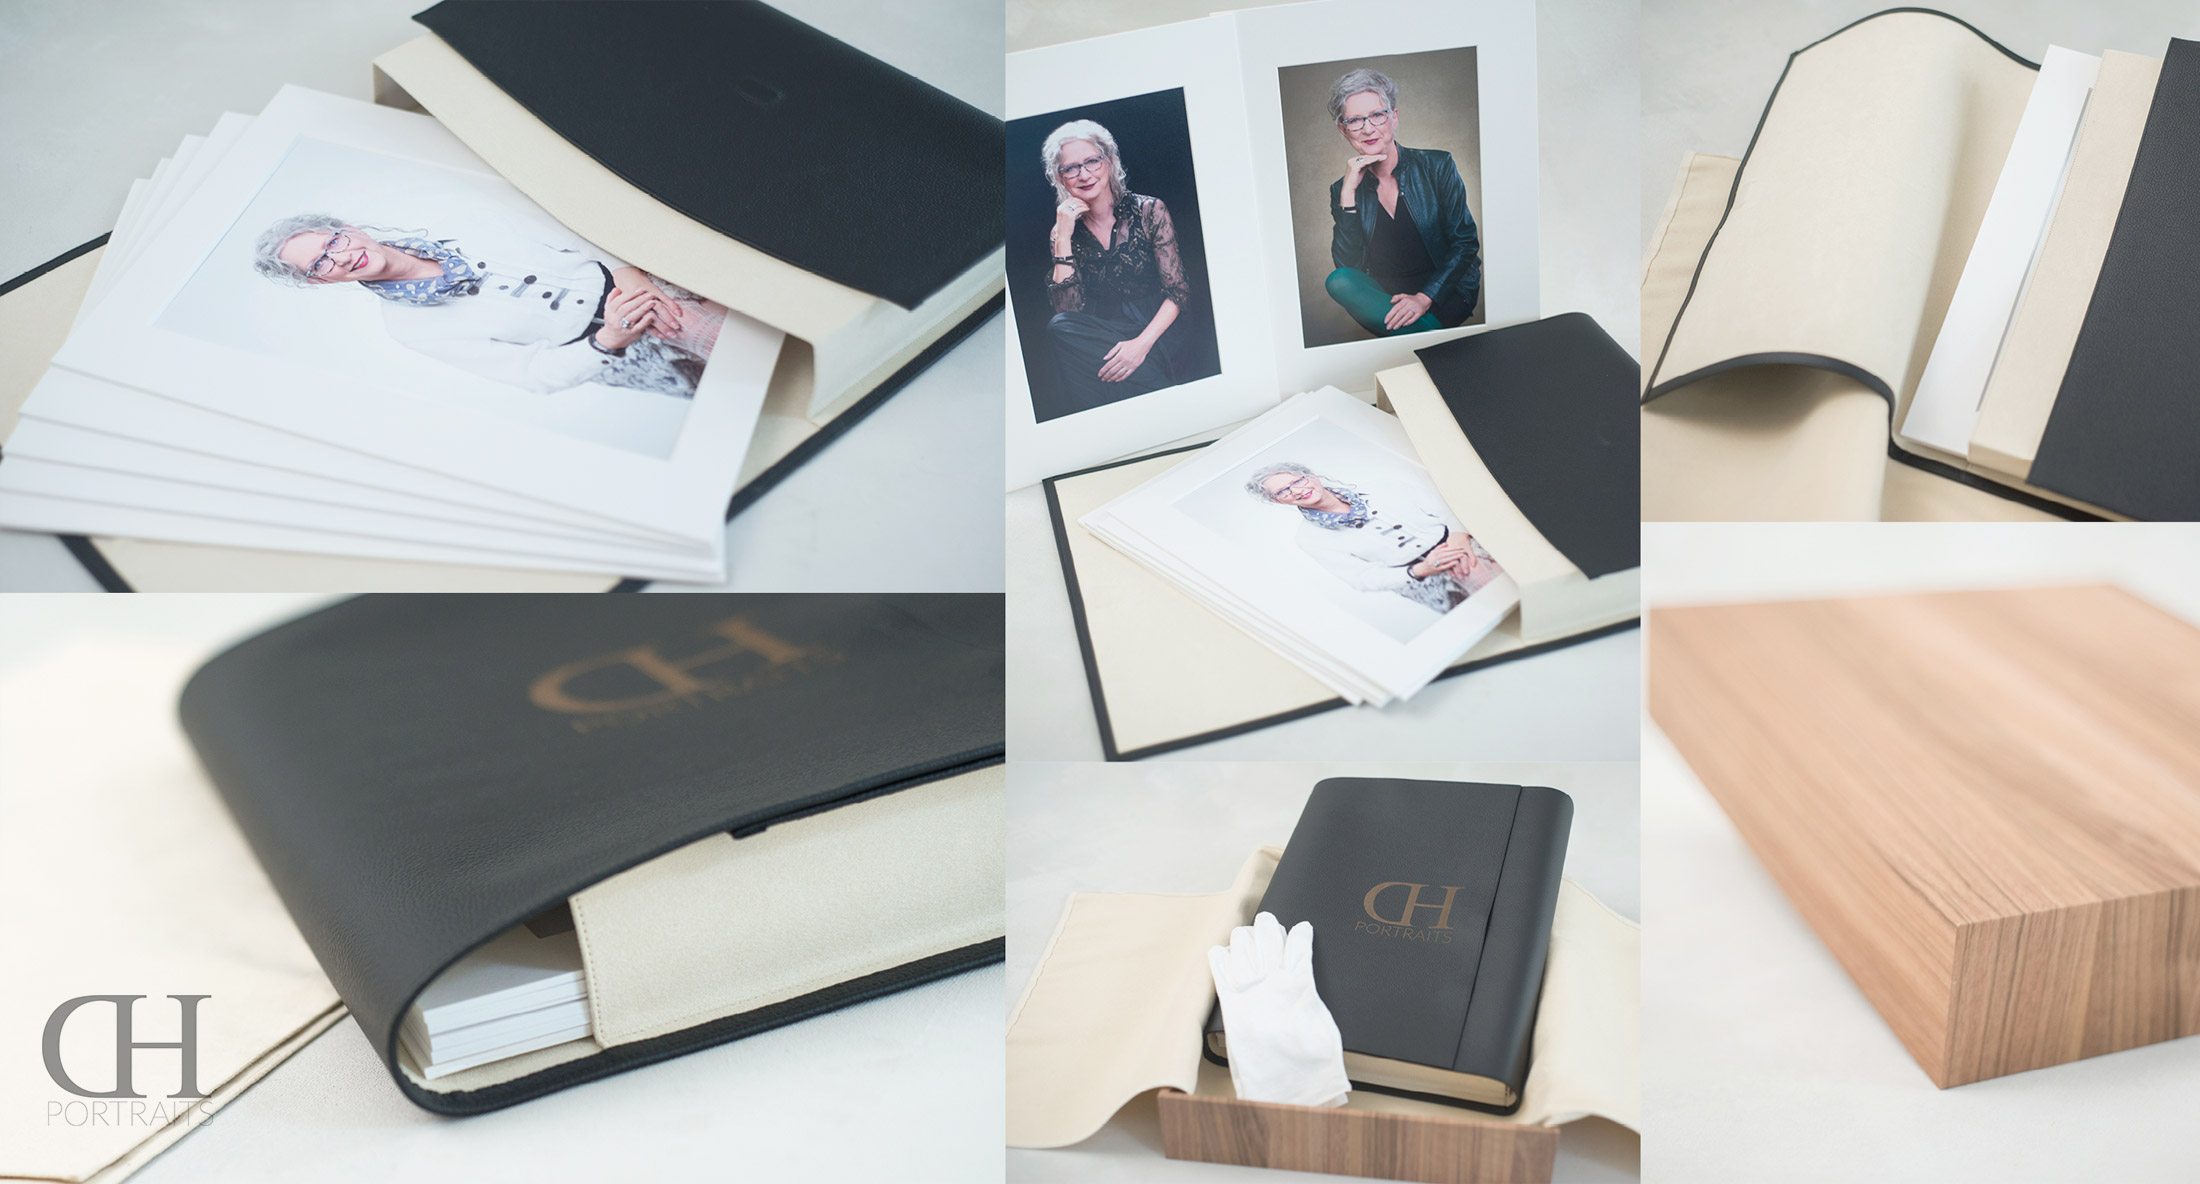 Leather Portfolio & Mats - Exclusive High Class Print Products - Dan Hostettler Portraits